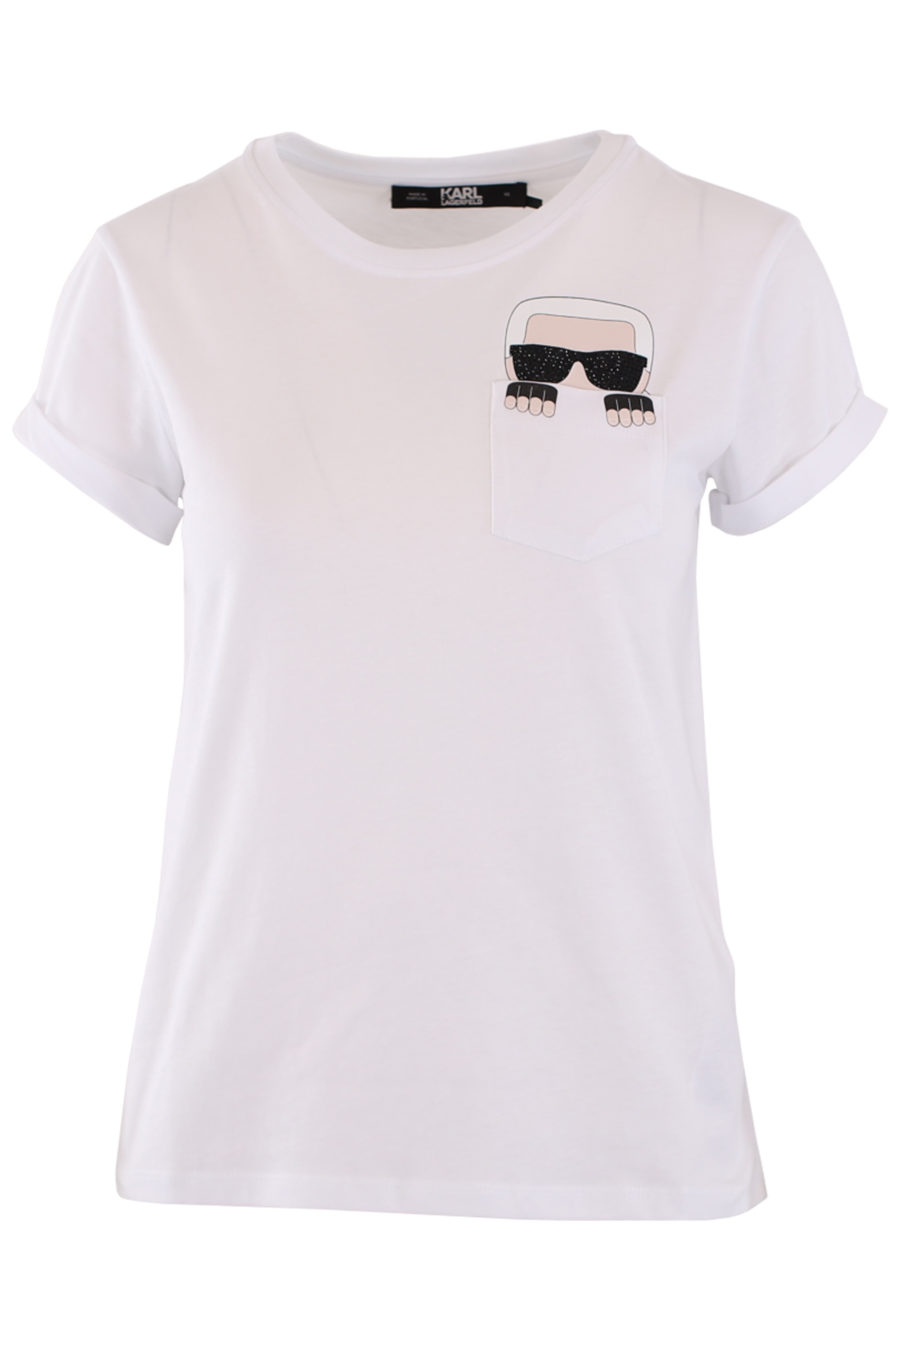 Camiseta blanca con logo y bolsillo - IMG 9000